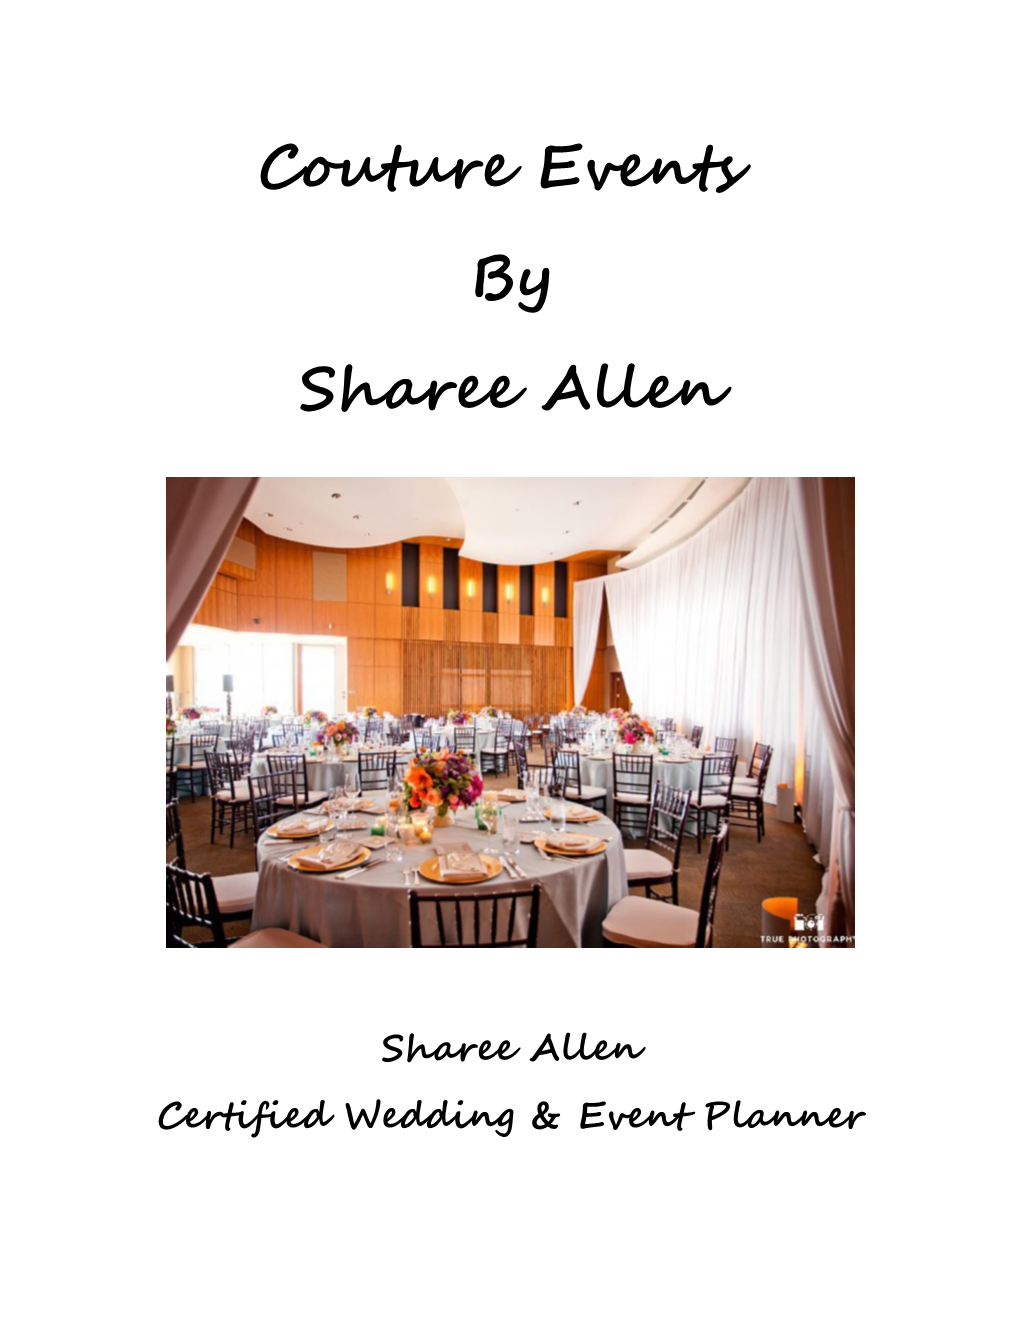 Certified Wedding & Event Planner